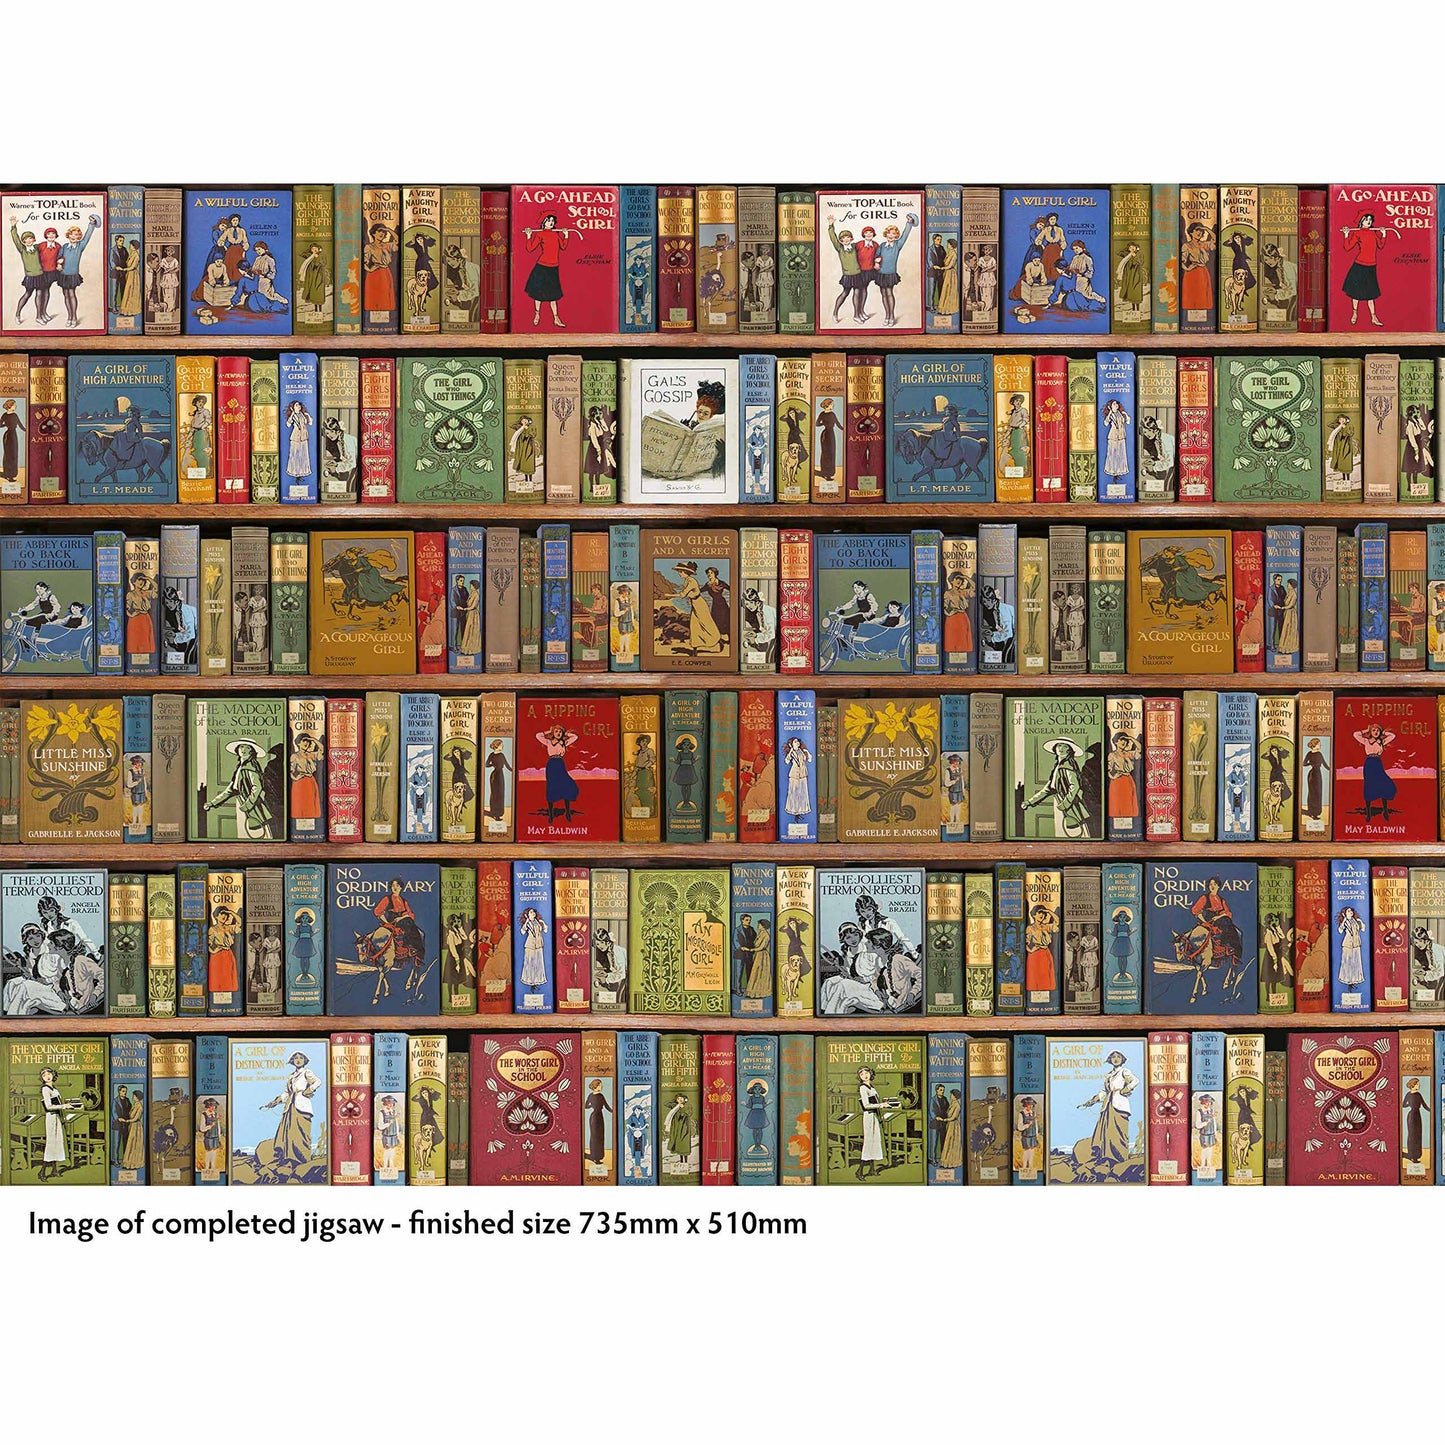 Jigsaw Puzzle - Bodleian Library: High Jinks Bookshelves - 1000-piece